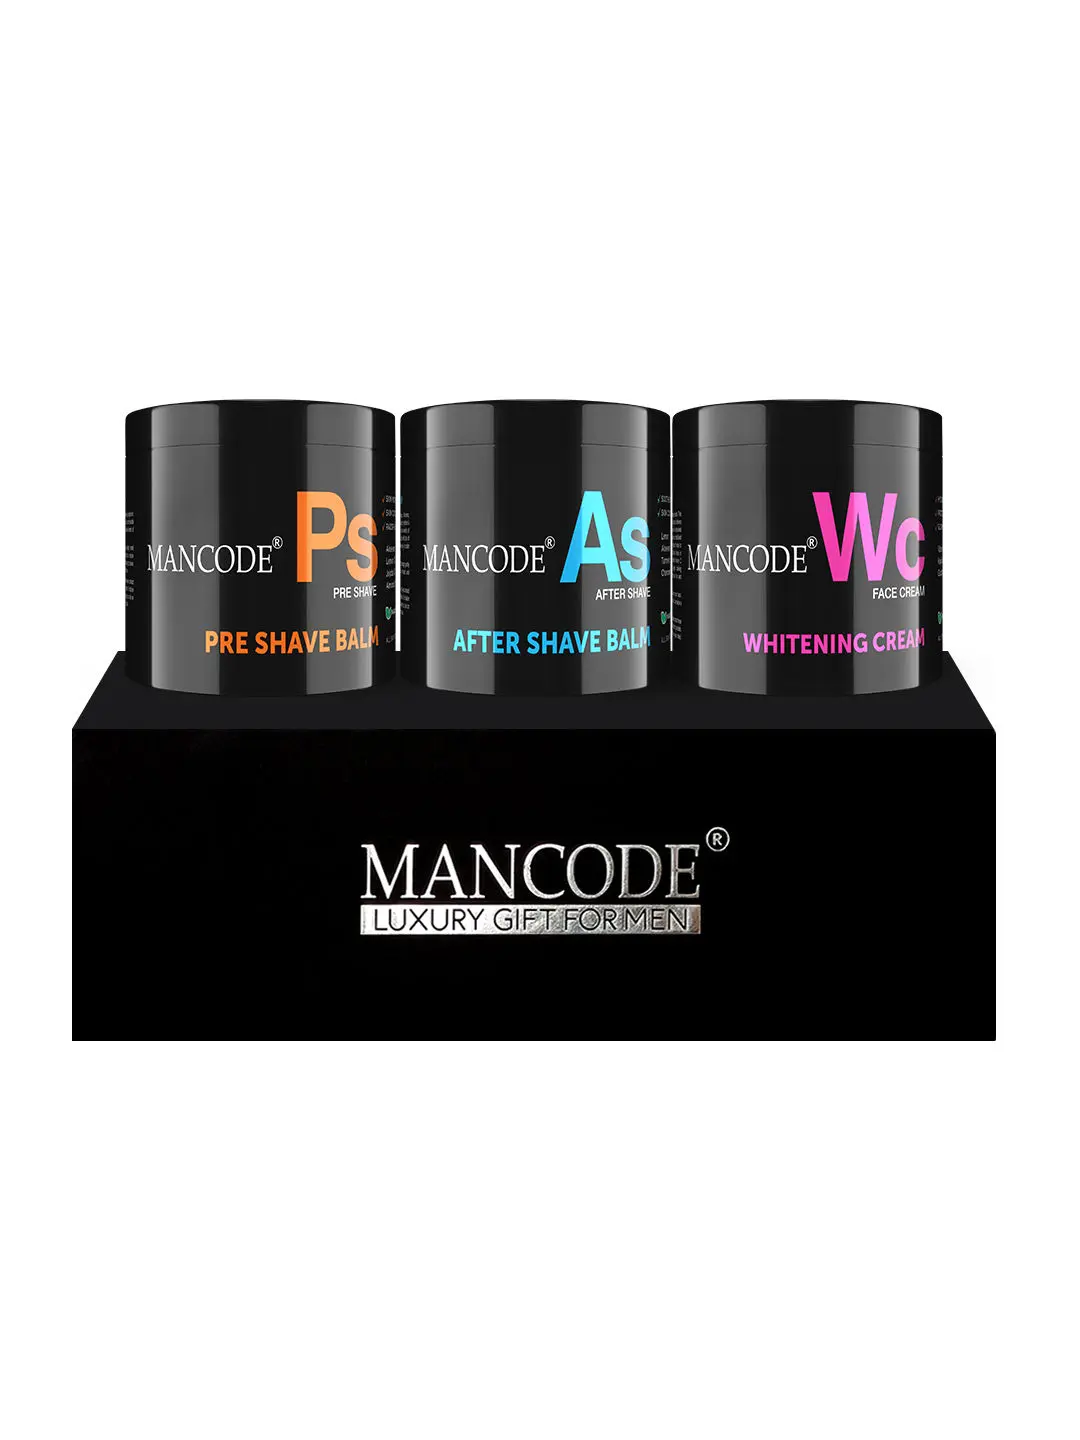 Mancode Gift Set for Men - Premium Luxury Shaving Essential Kit (Pre Shave Balm + After Shave Balm + Whitening Cream) Gift Set - 06